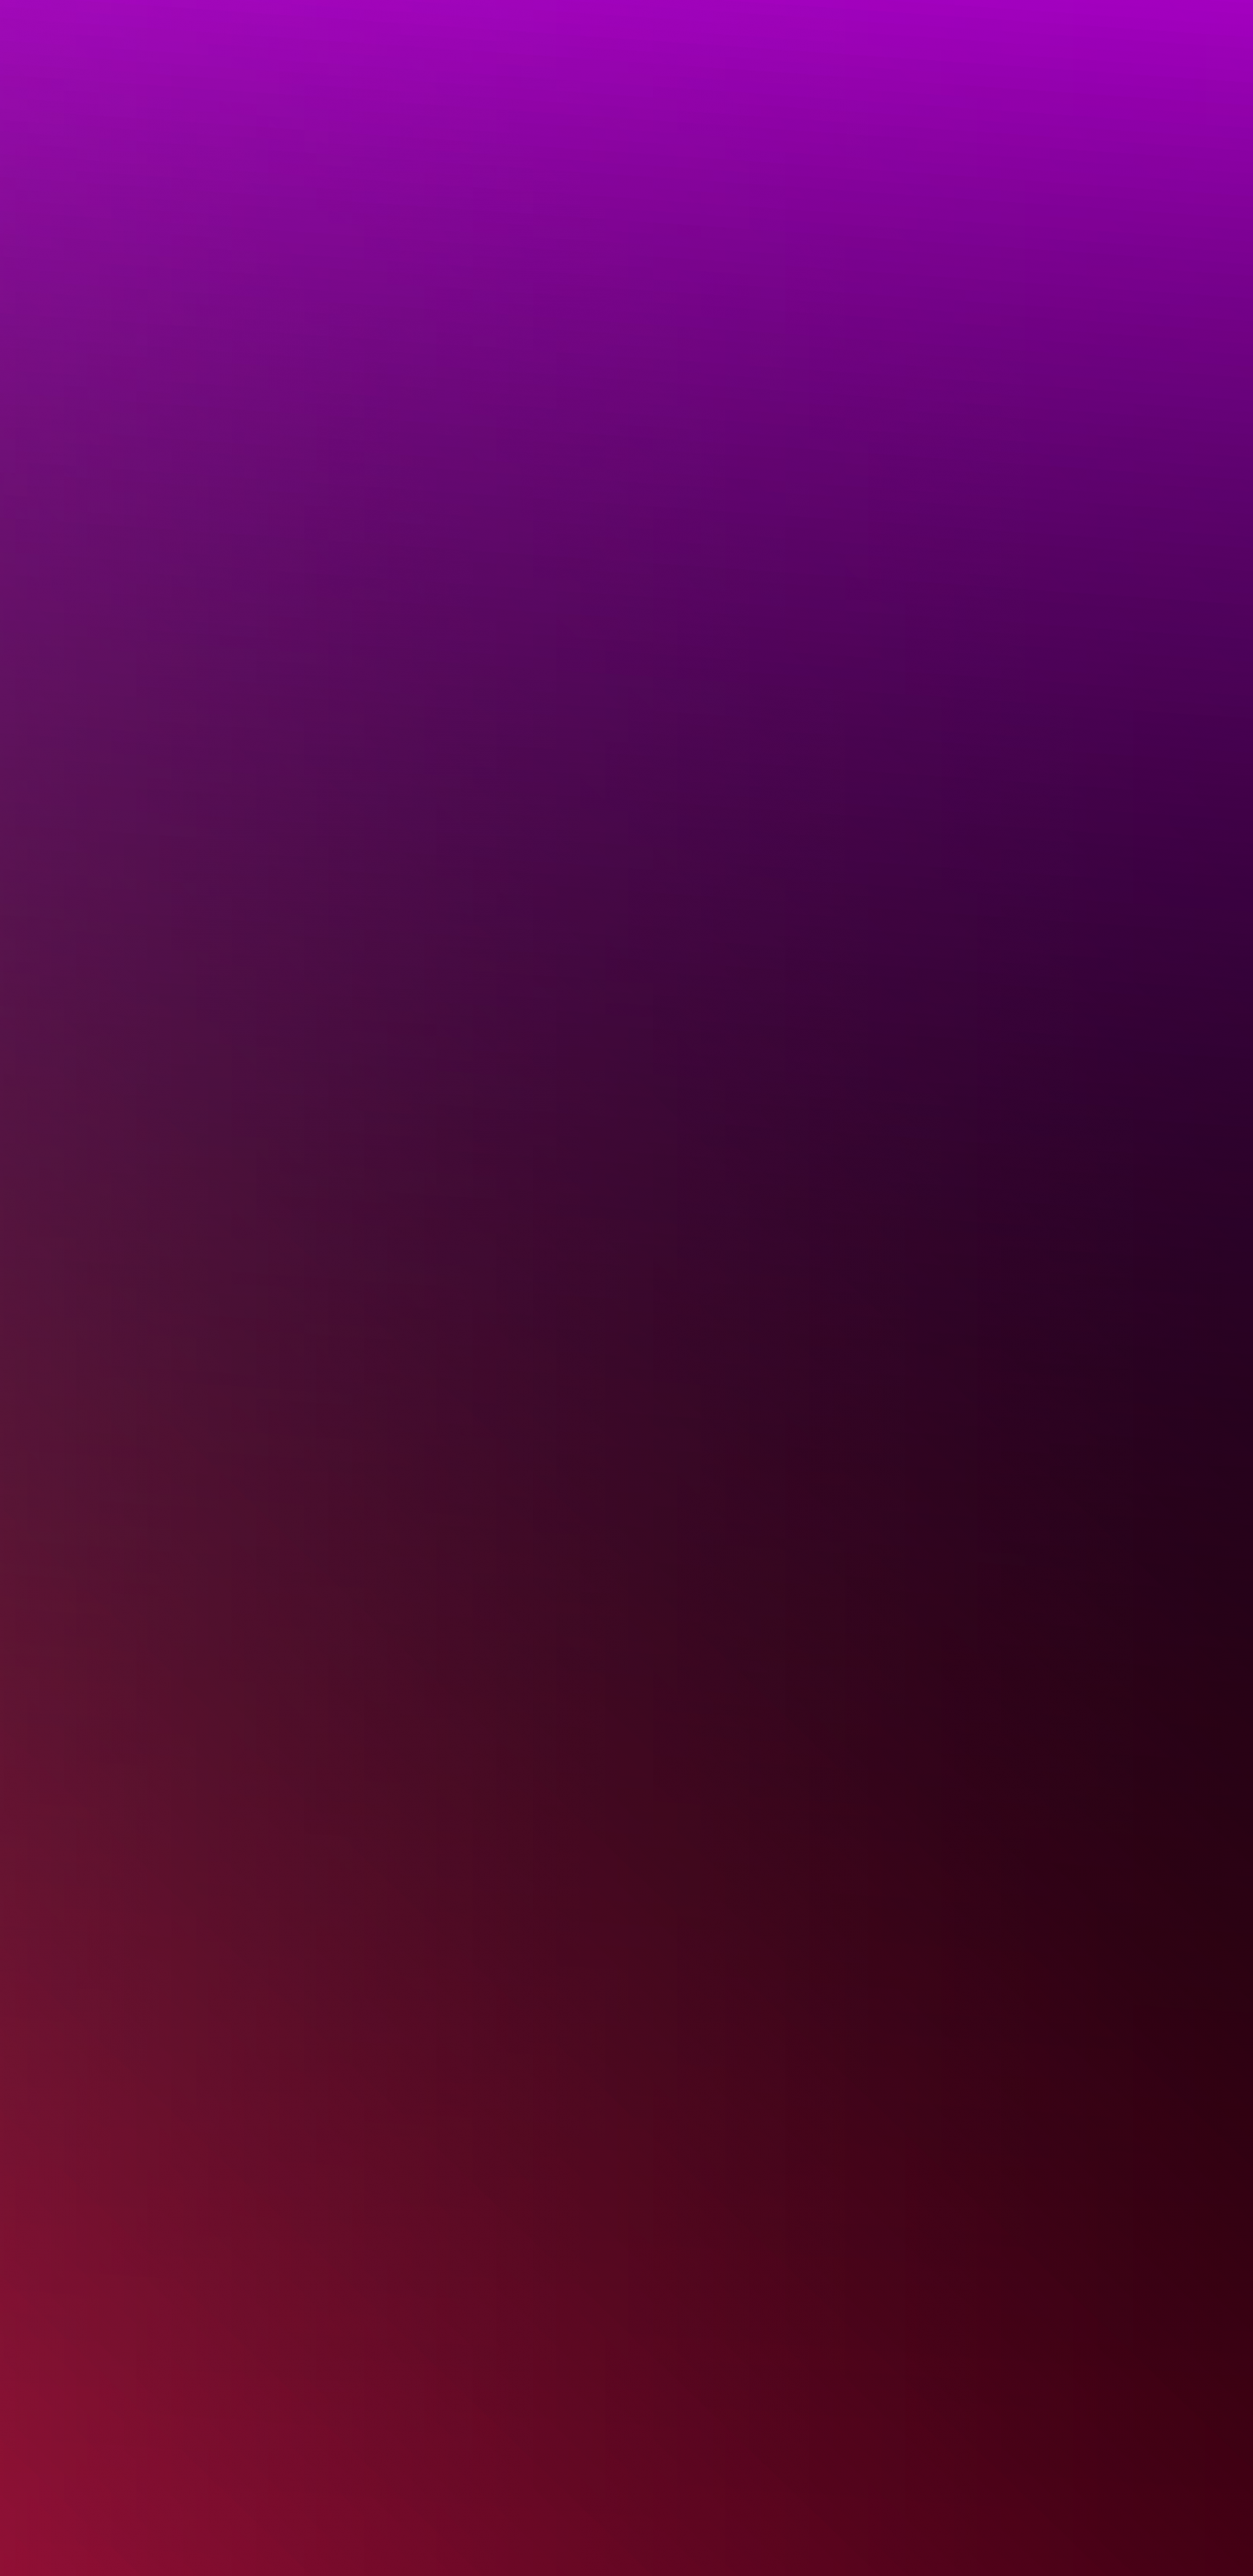 Download 1440x2960 Violet Gradient Wallpaper for Samsung Galaxy